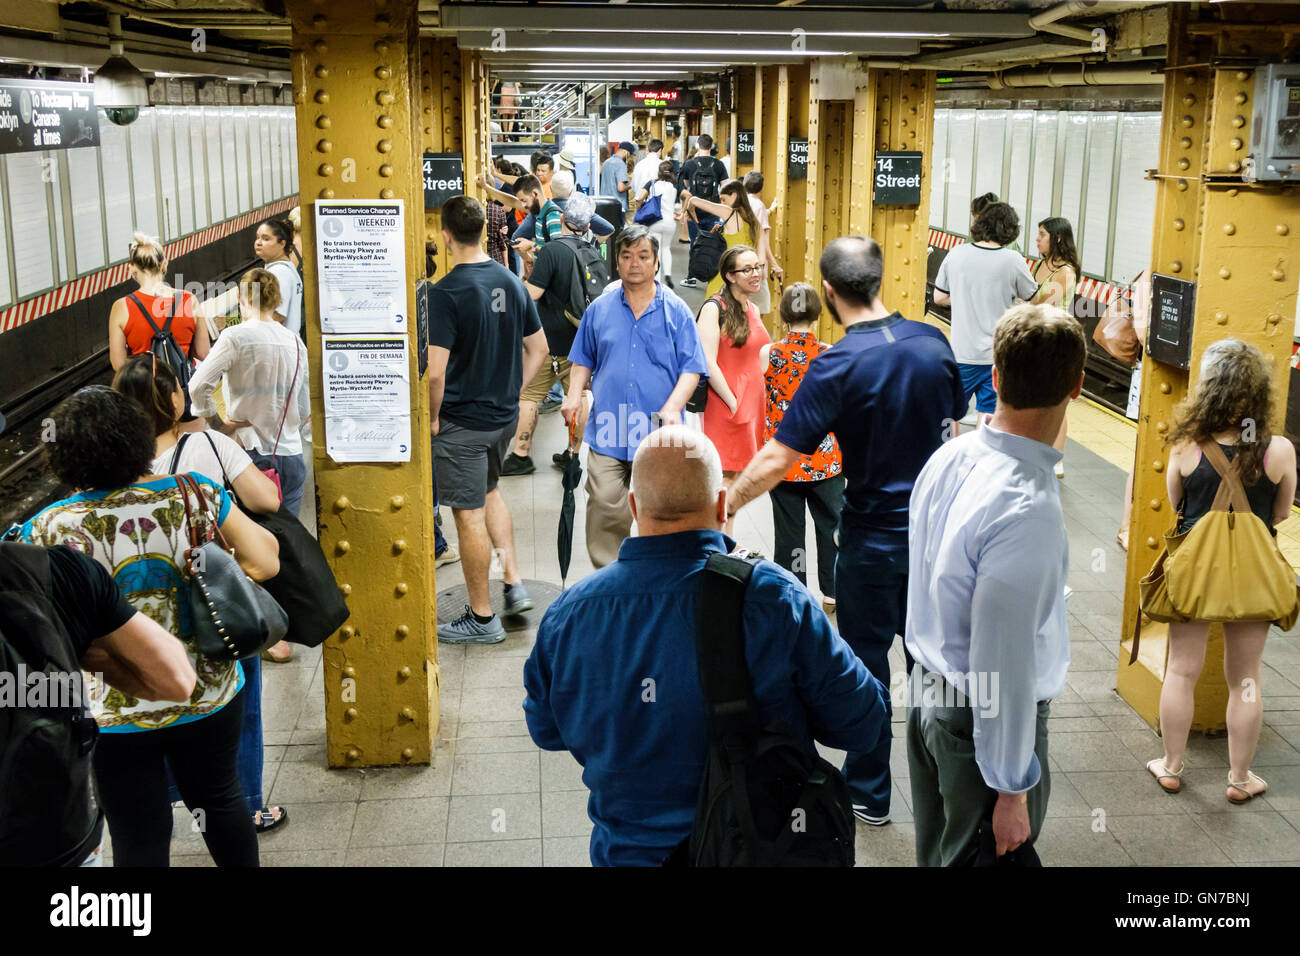 New York City,NY NYC Manhattan,Midtown,14th Street-Union Square,subway,station,MTA,platform,crowded,Asian adult,adults,man men male,woman female women Stock Photo